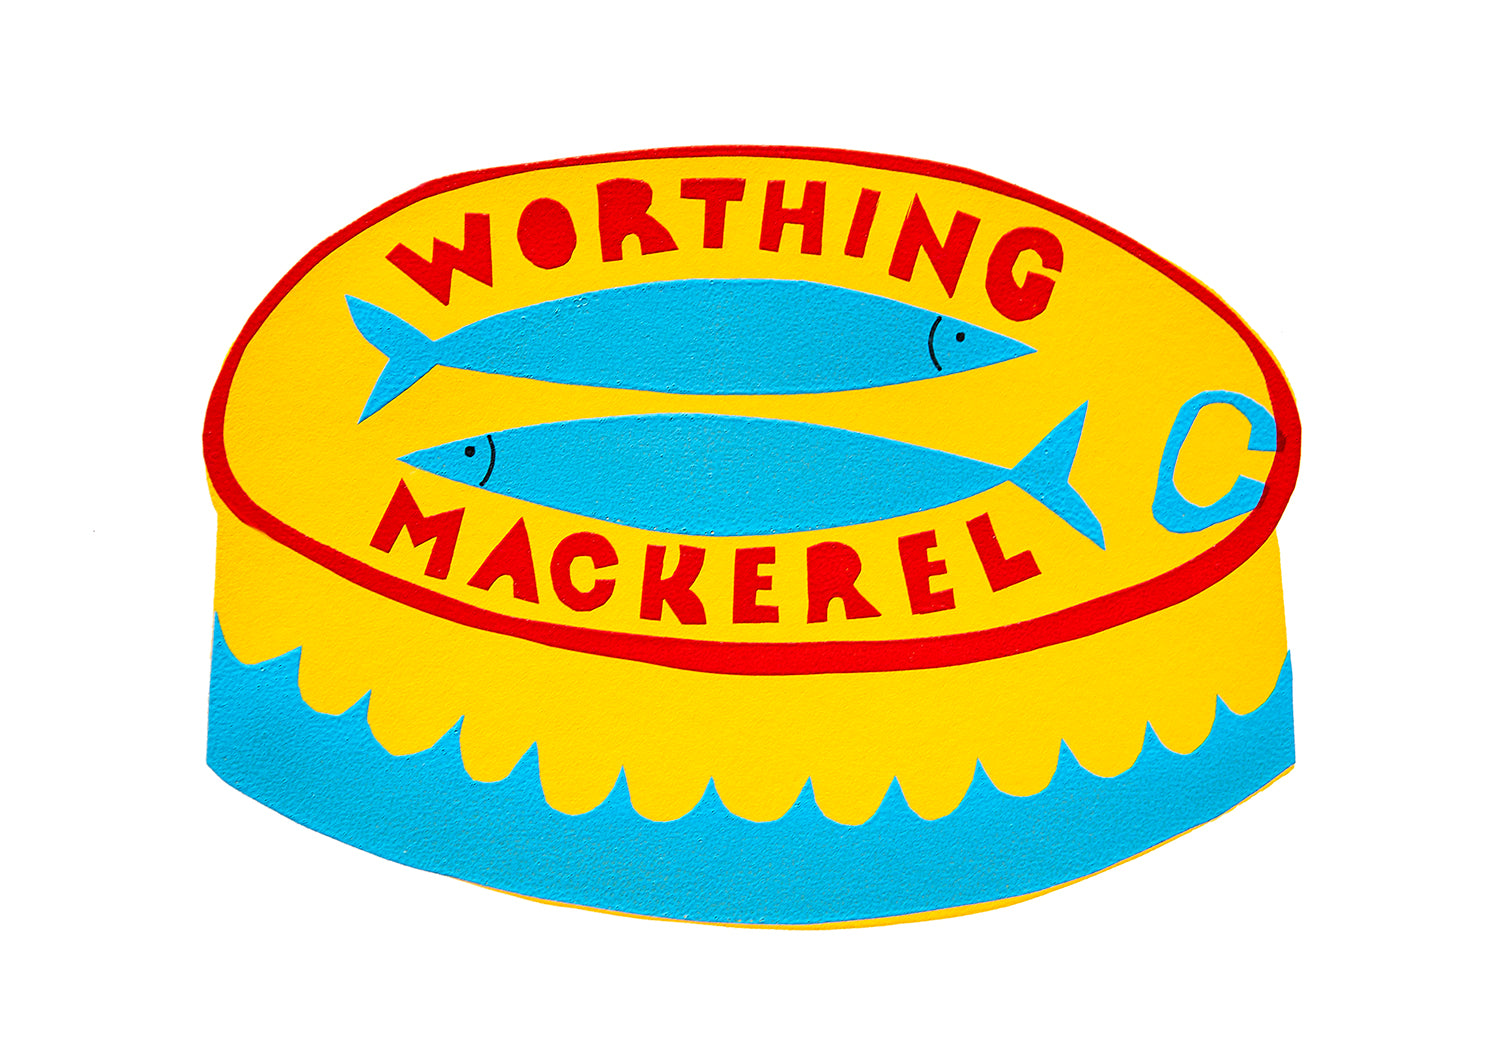 Mackerel greetings card - Inspired 